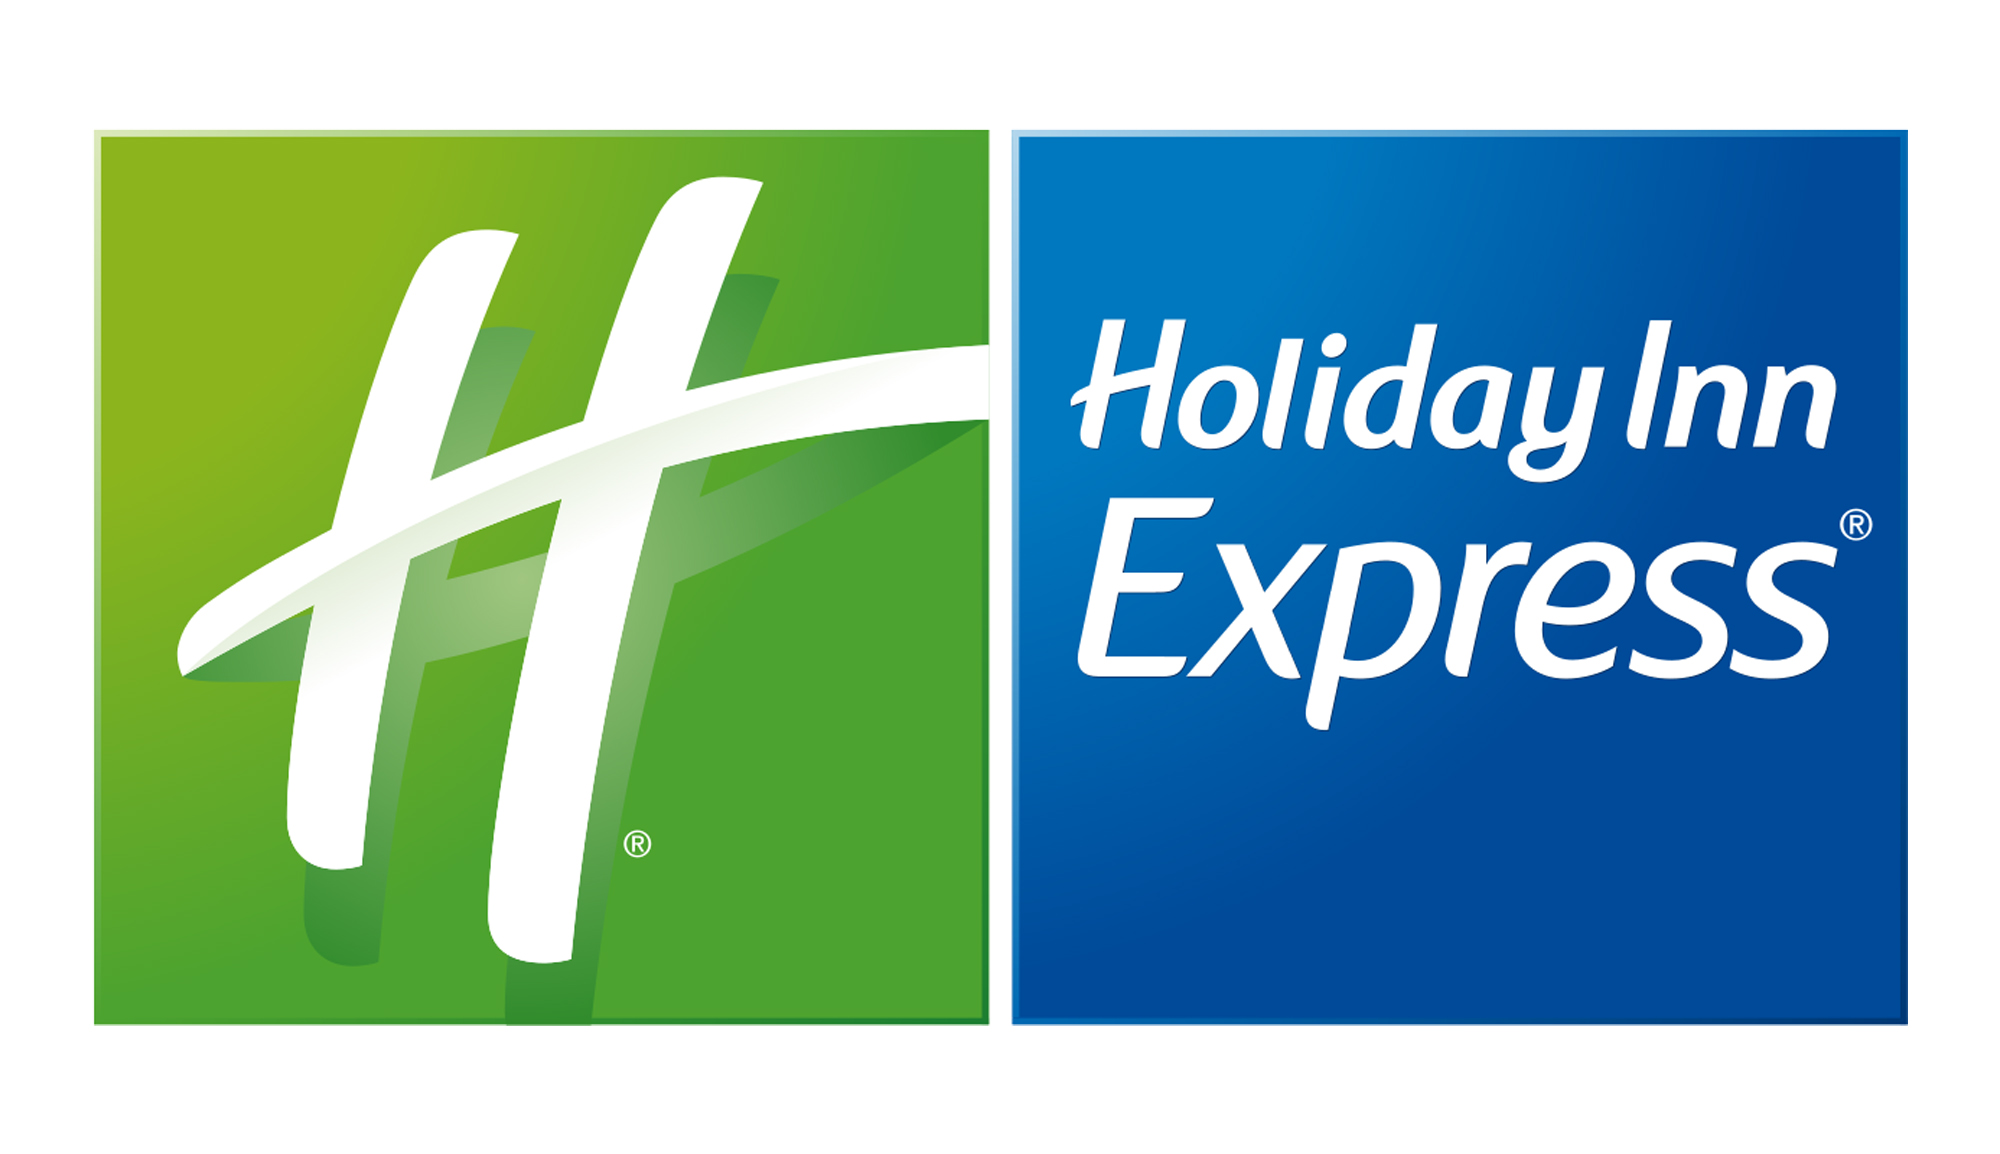 Holiday Inn Express hotel logo